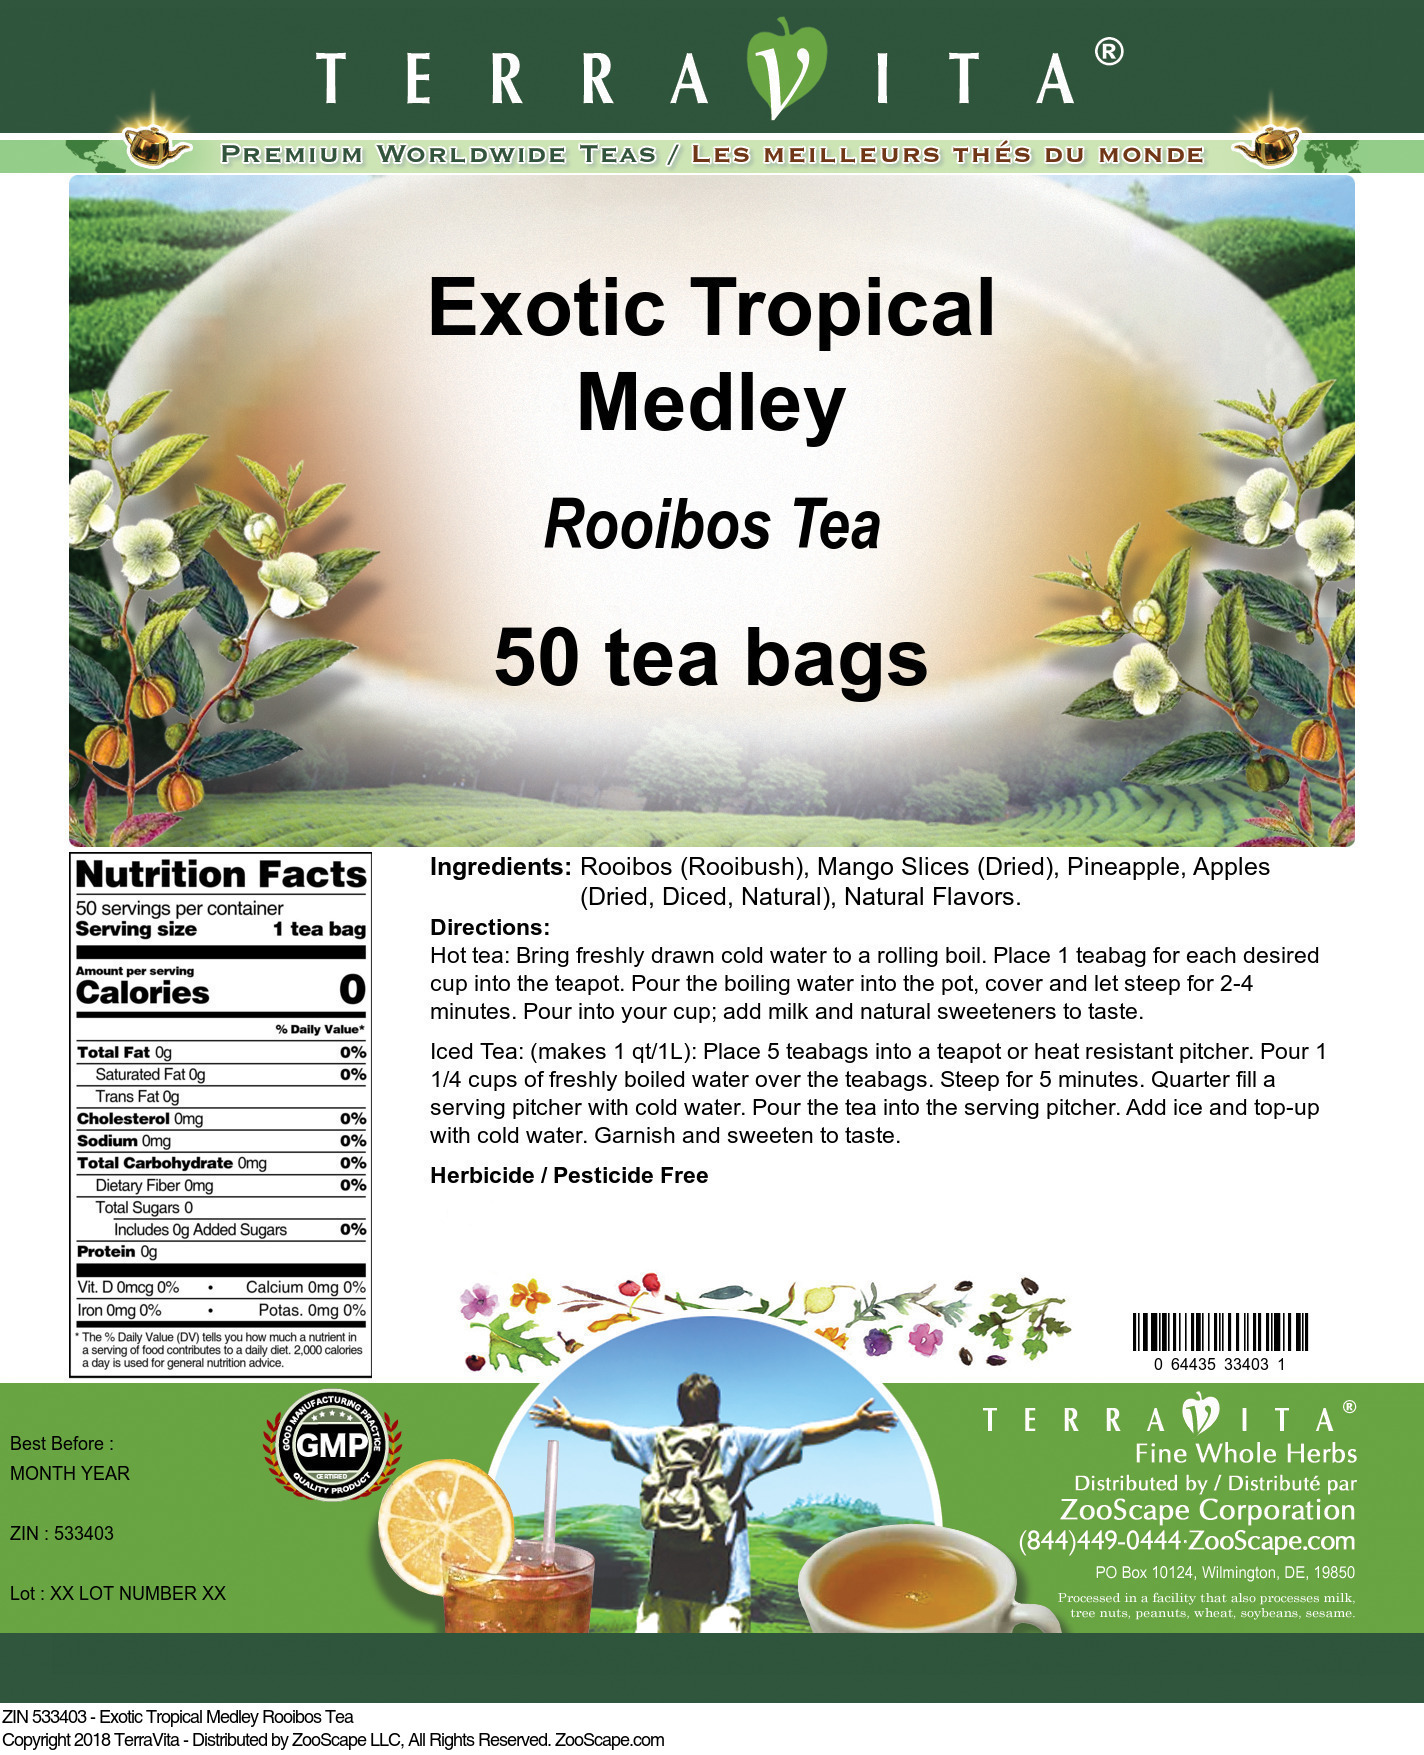 Exotic Tropical Medley Rooibos Tea - Label